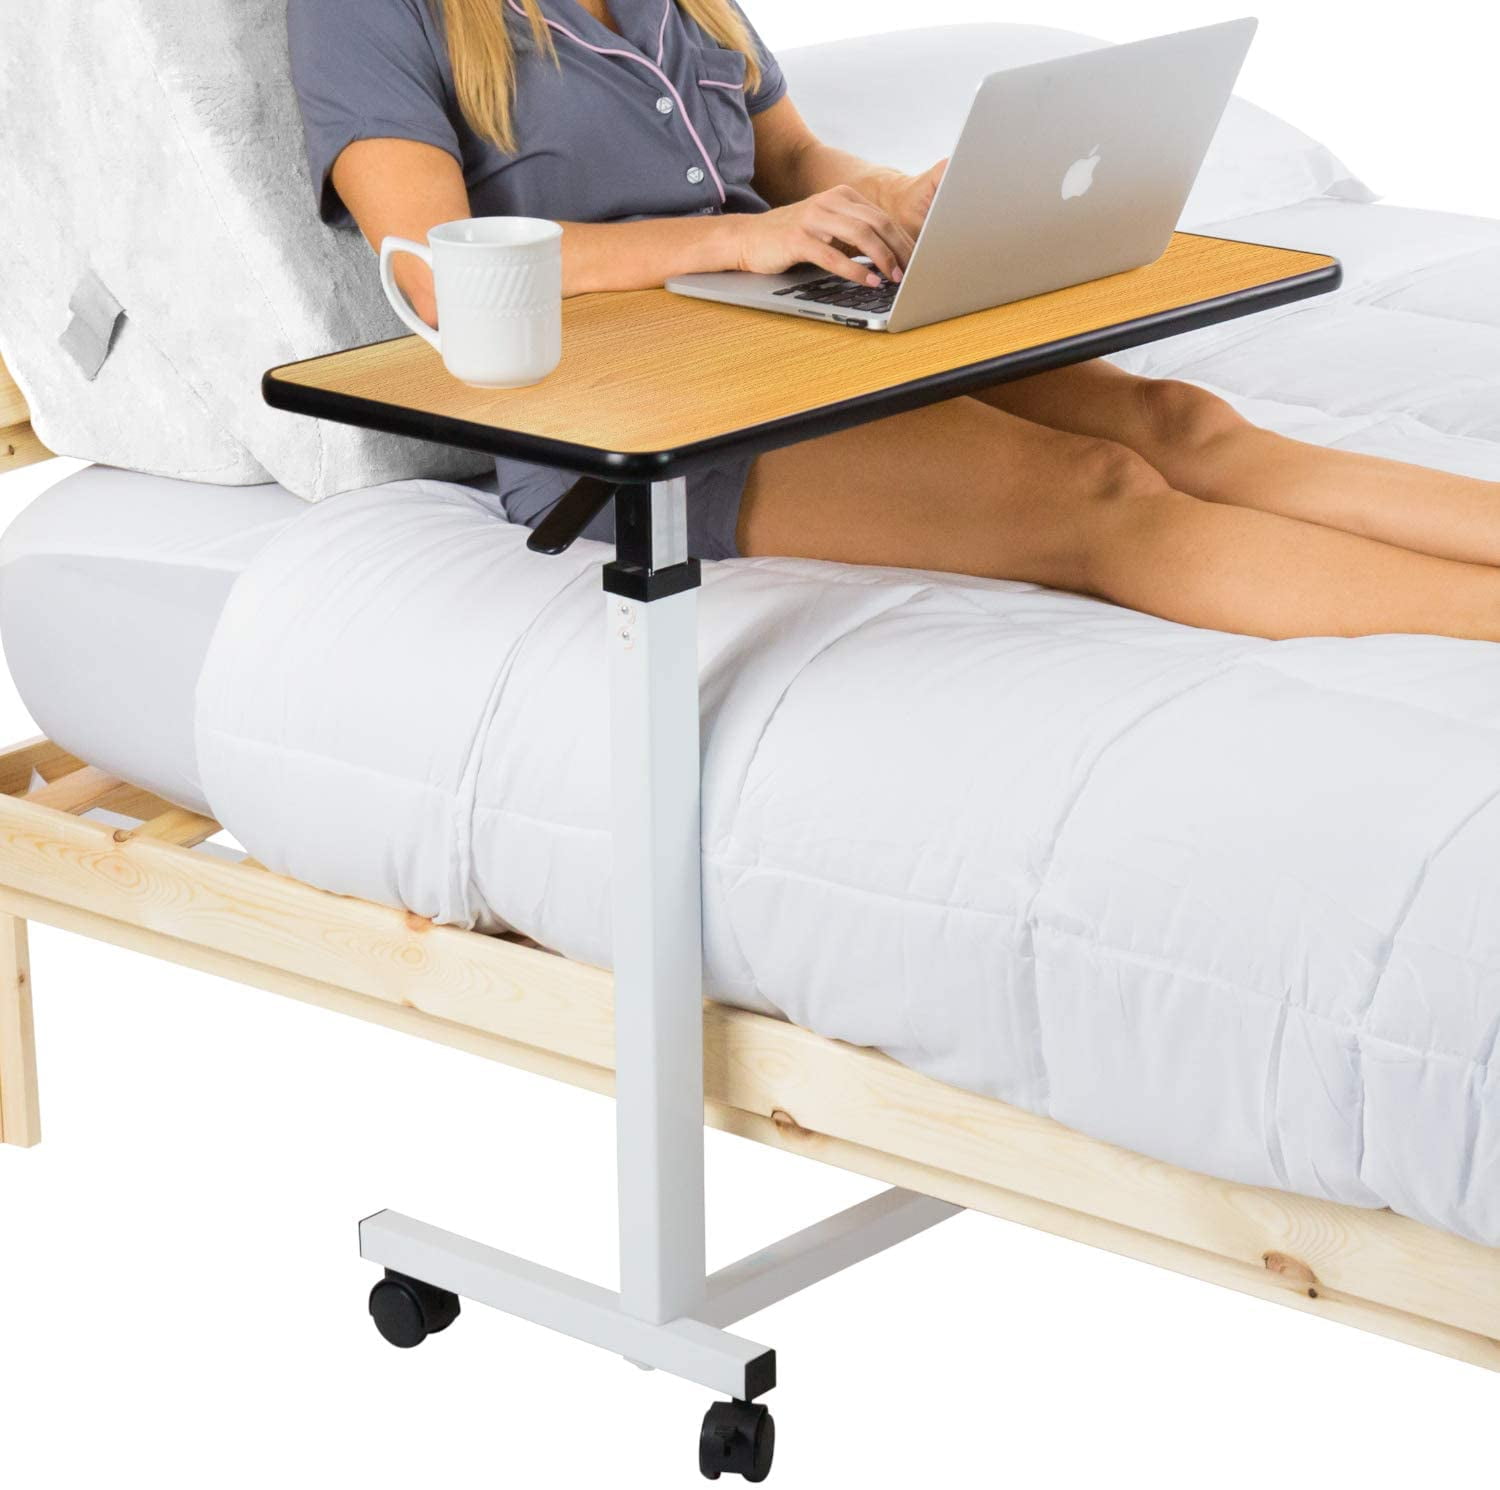 Vive Overbed Table (XL) - Hospital Bed Table - Swivel Wheel Rolling Tray - Adjustable Over Bedside Home Desk - Laptop, Reading, Eating Breakfast Cart Stand - Bedridden, Elderly, Senior Patient Aid - Walmart.com